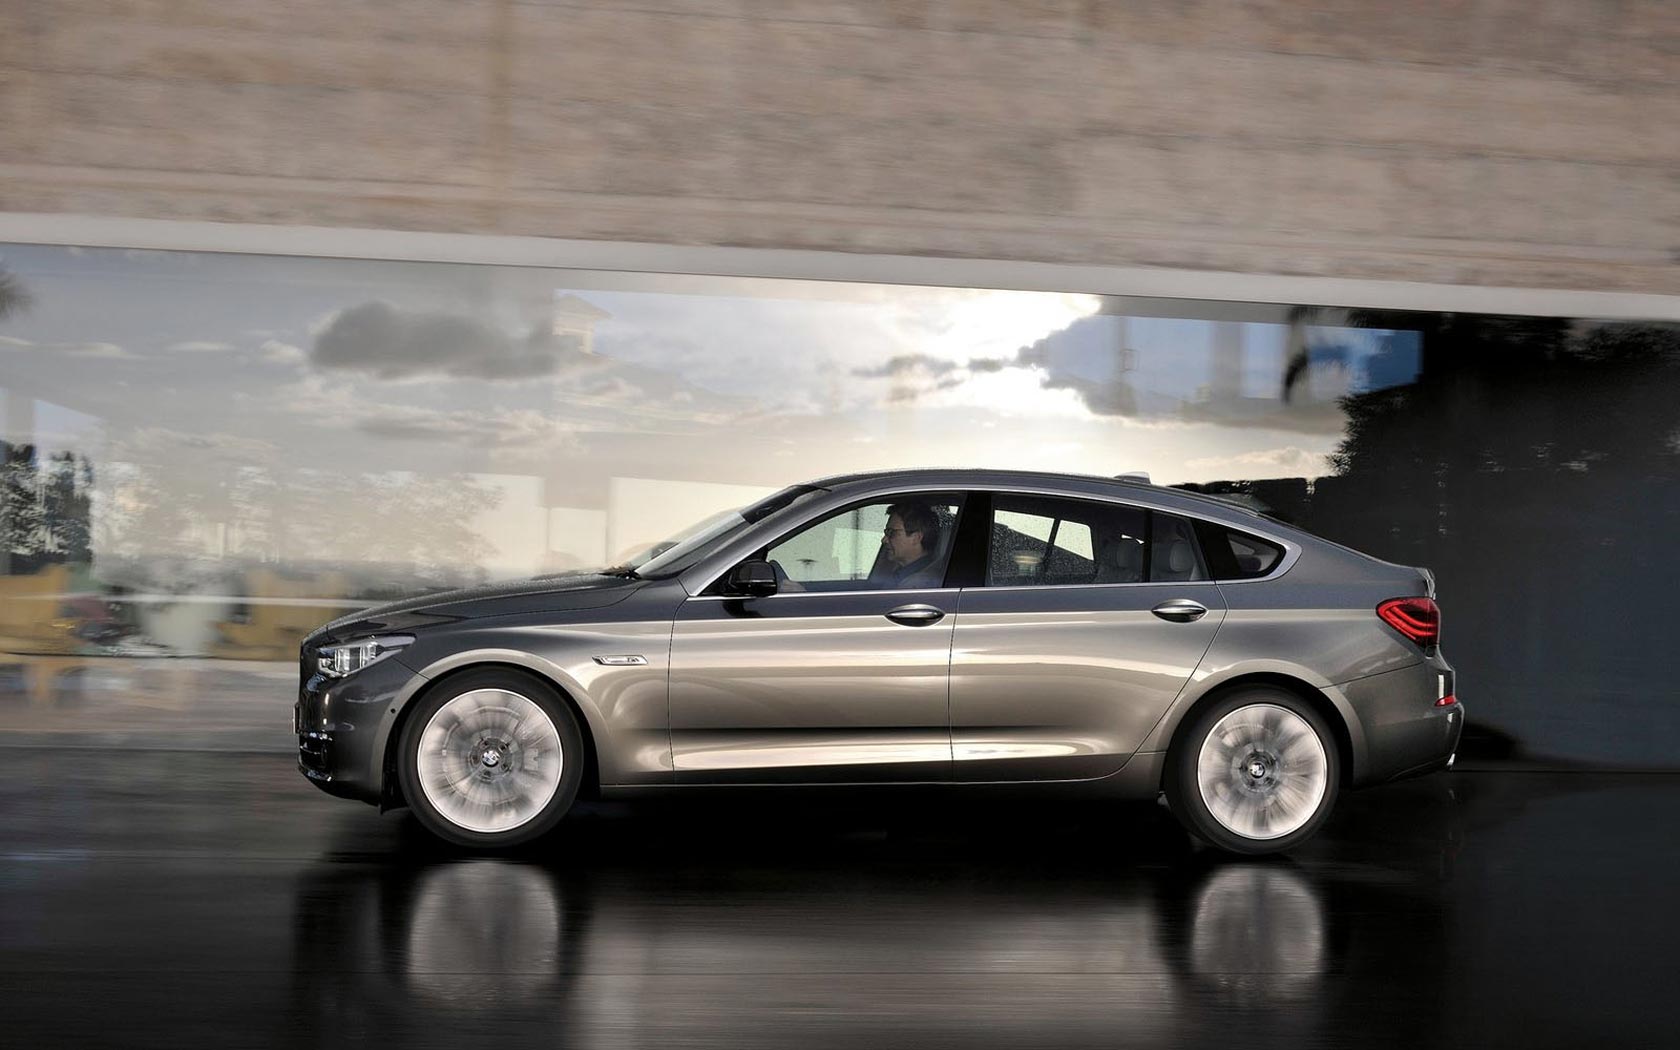  BMW 5-series Gran Turismo 